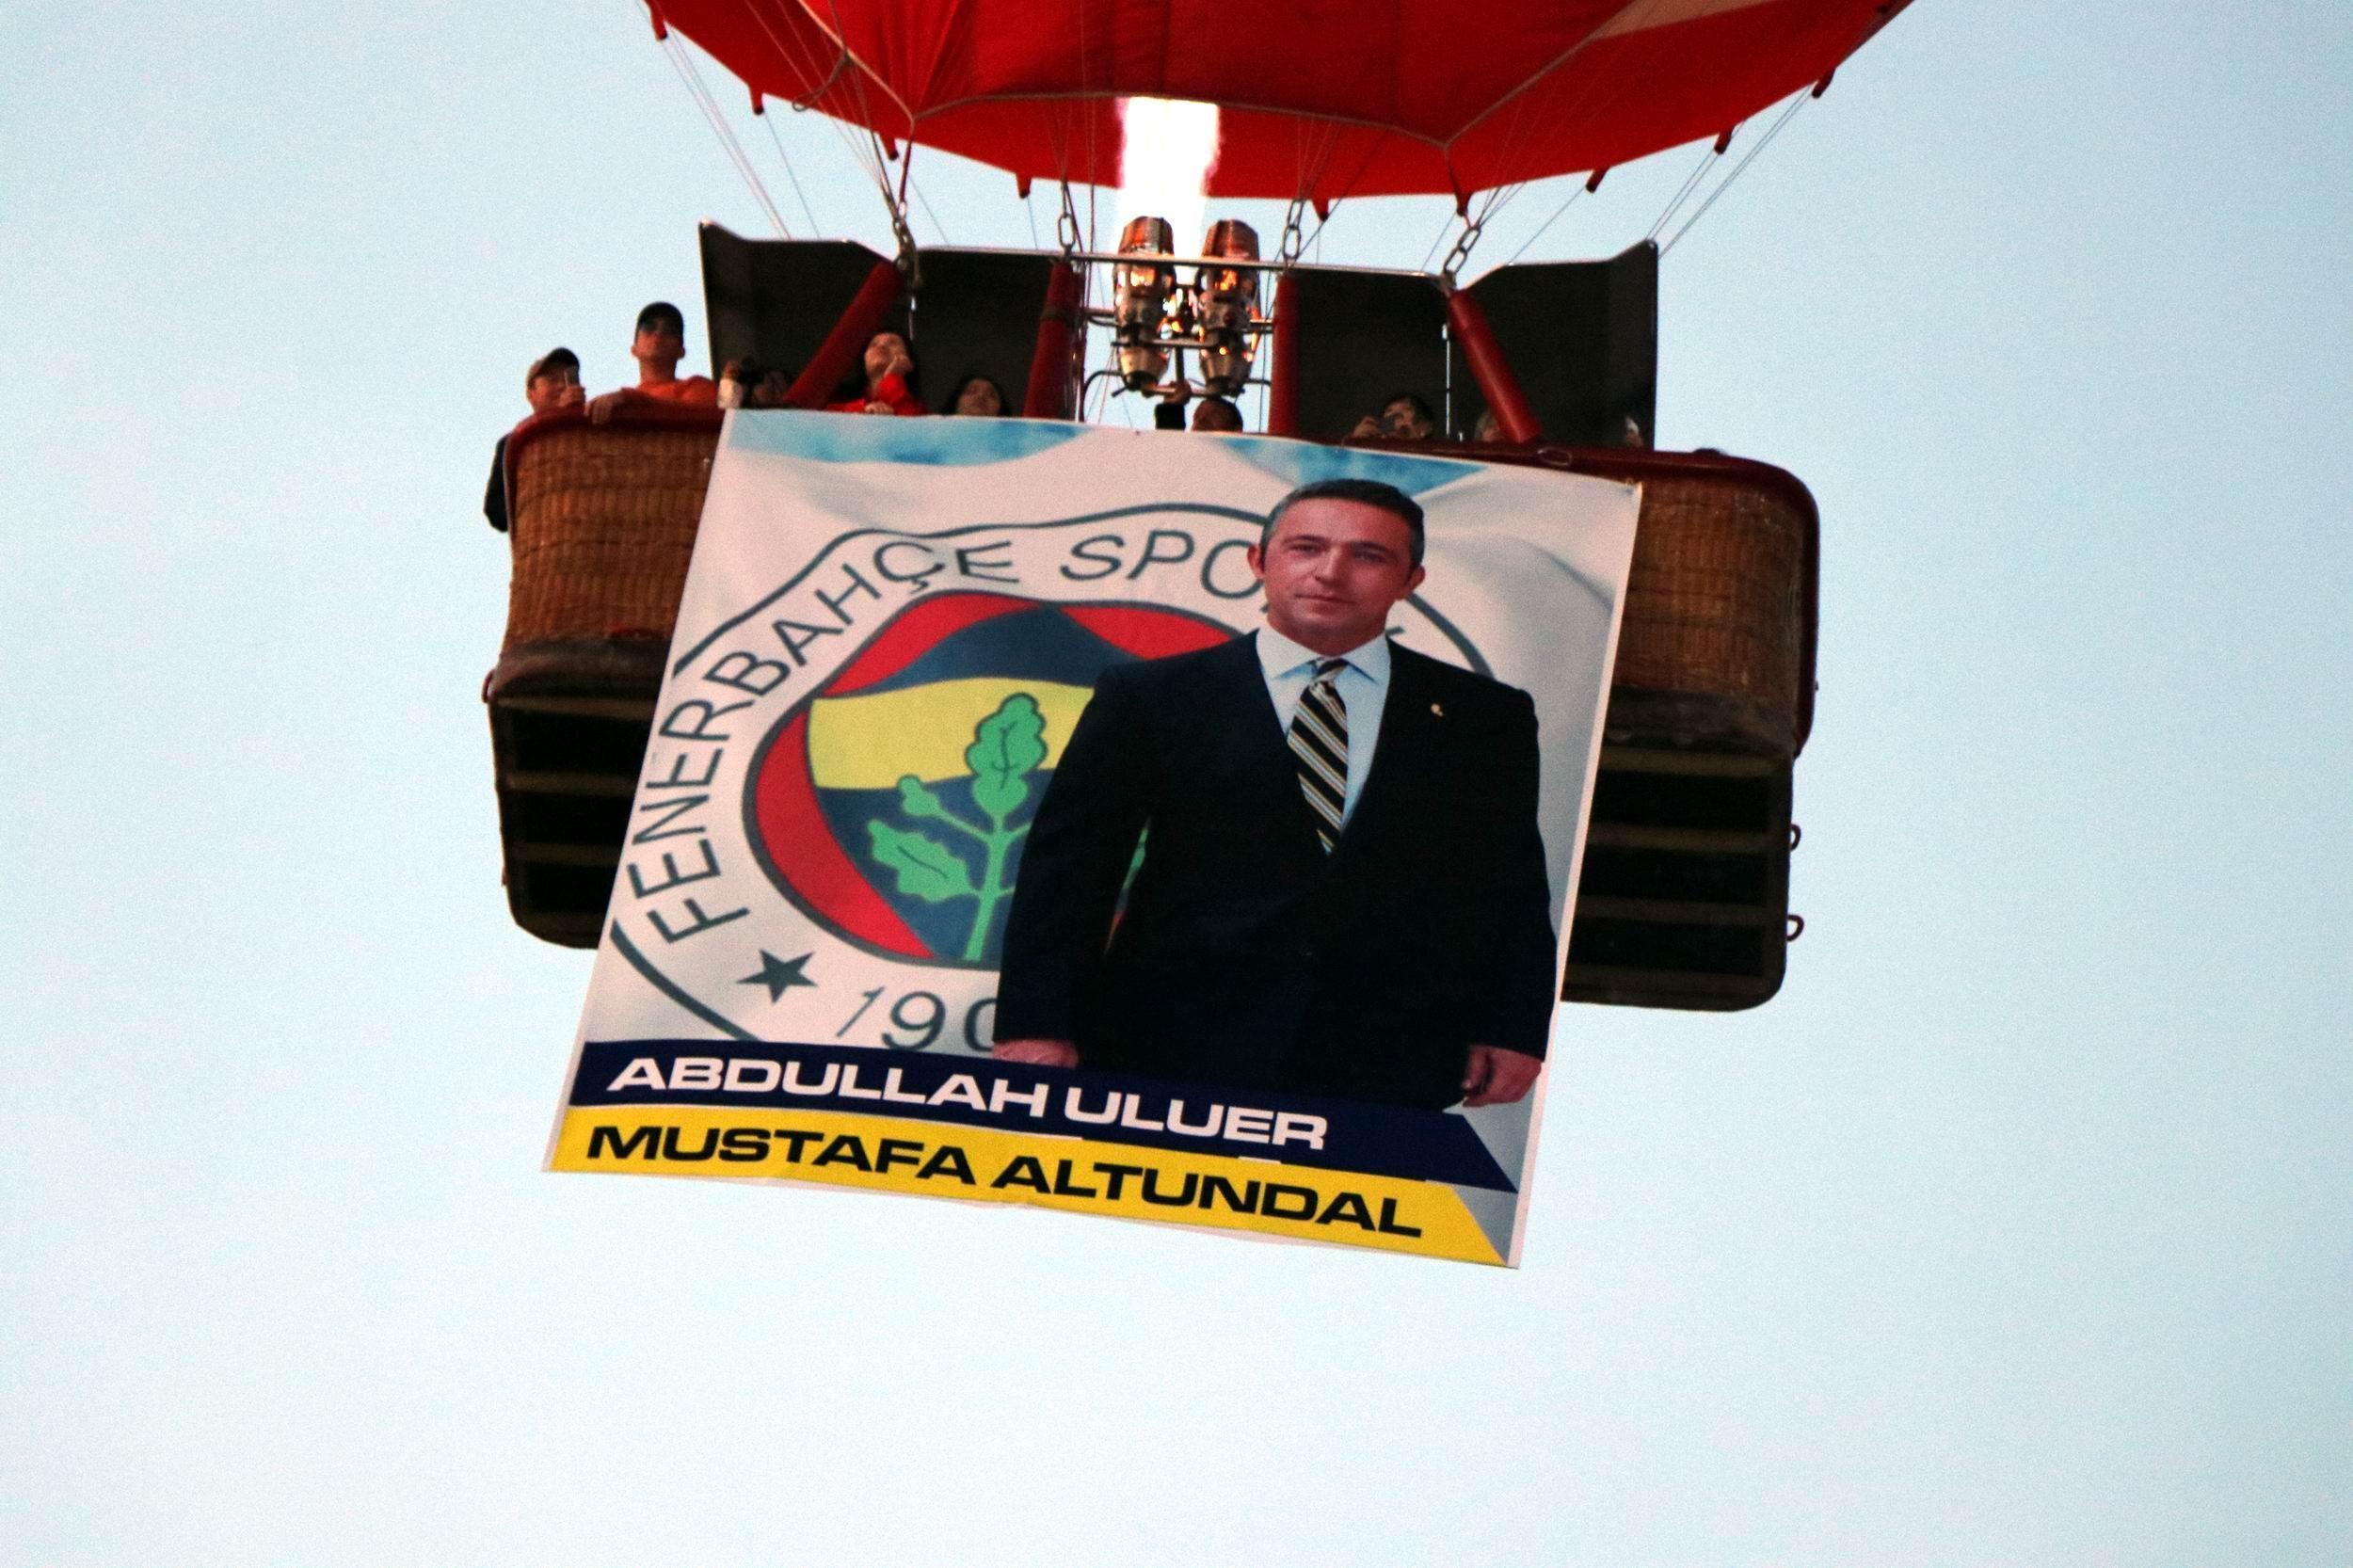 Kapadokyada Ali Koç posteri ile balon turu